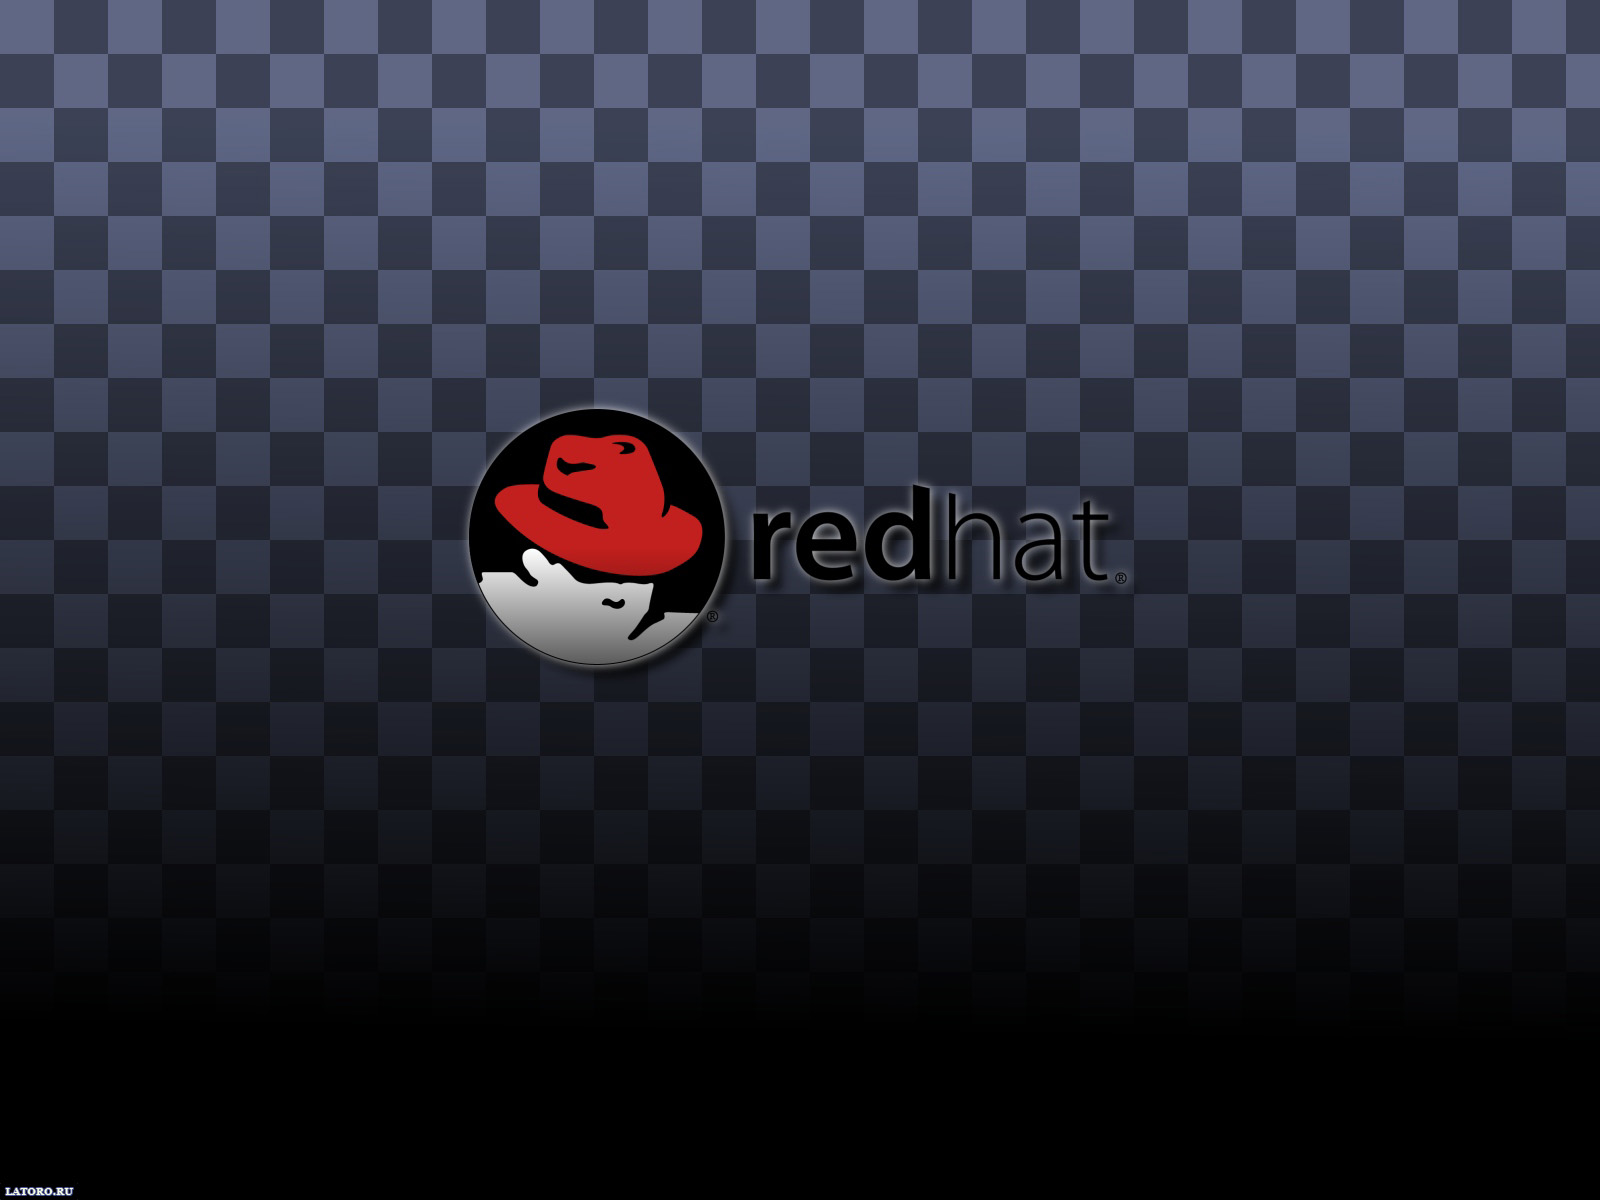 Red Hat Linux Desktop Wallpapers FREE on Latorocom